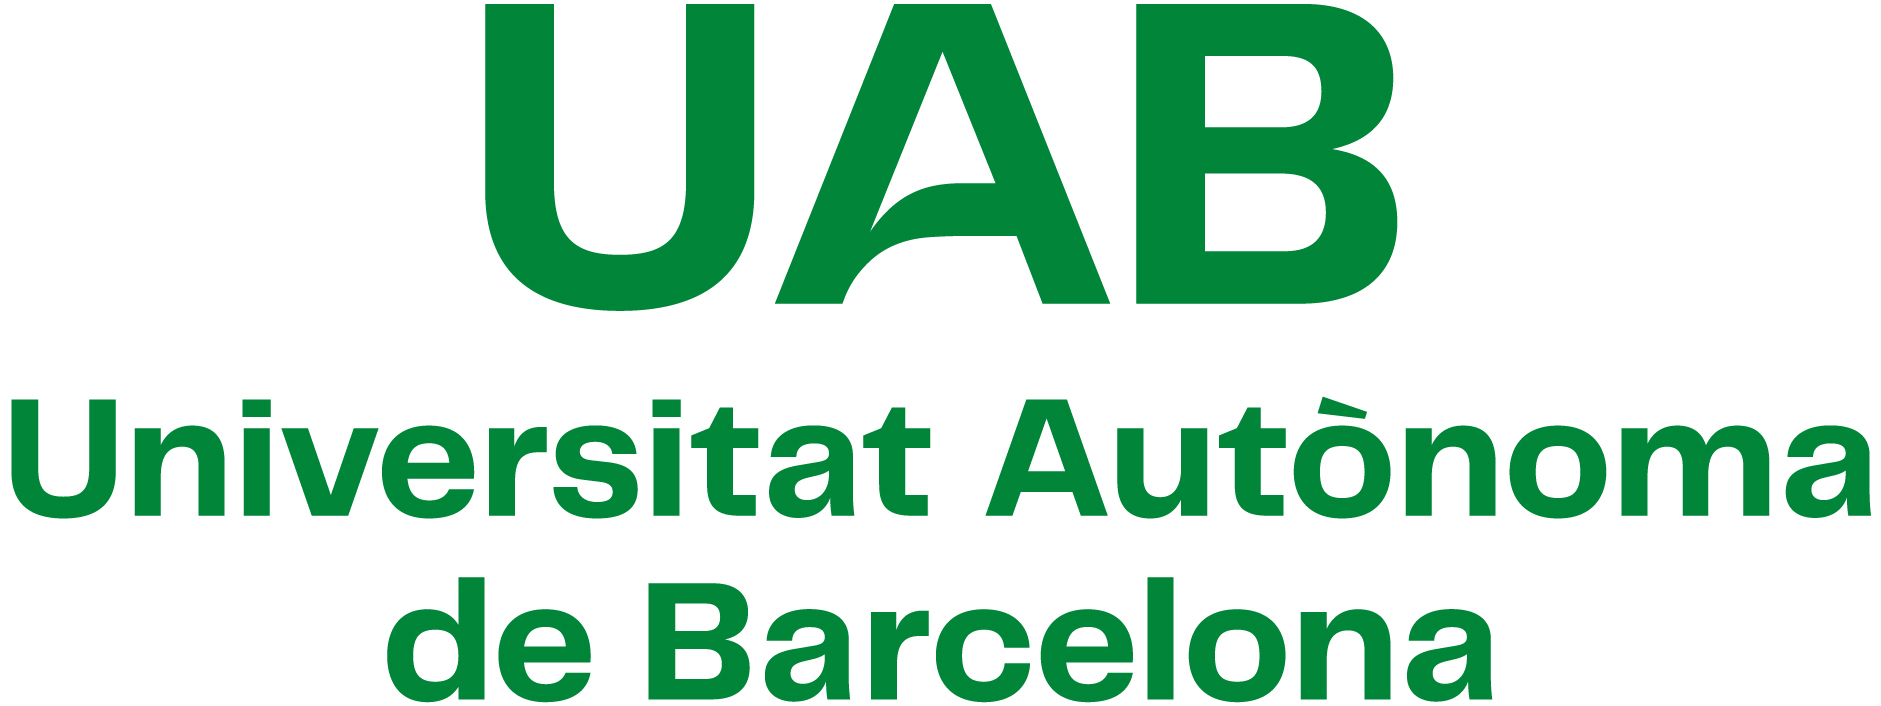 logo uab universitat autònoma de barcelona